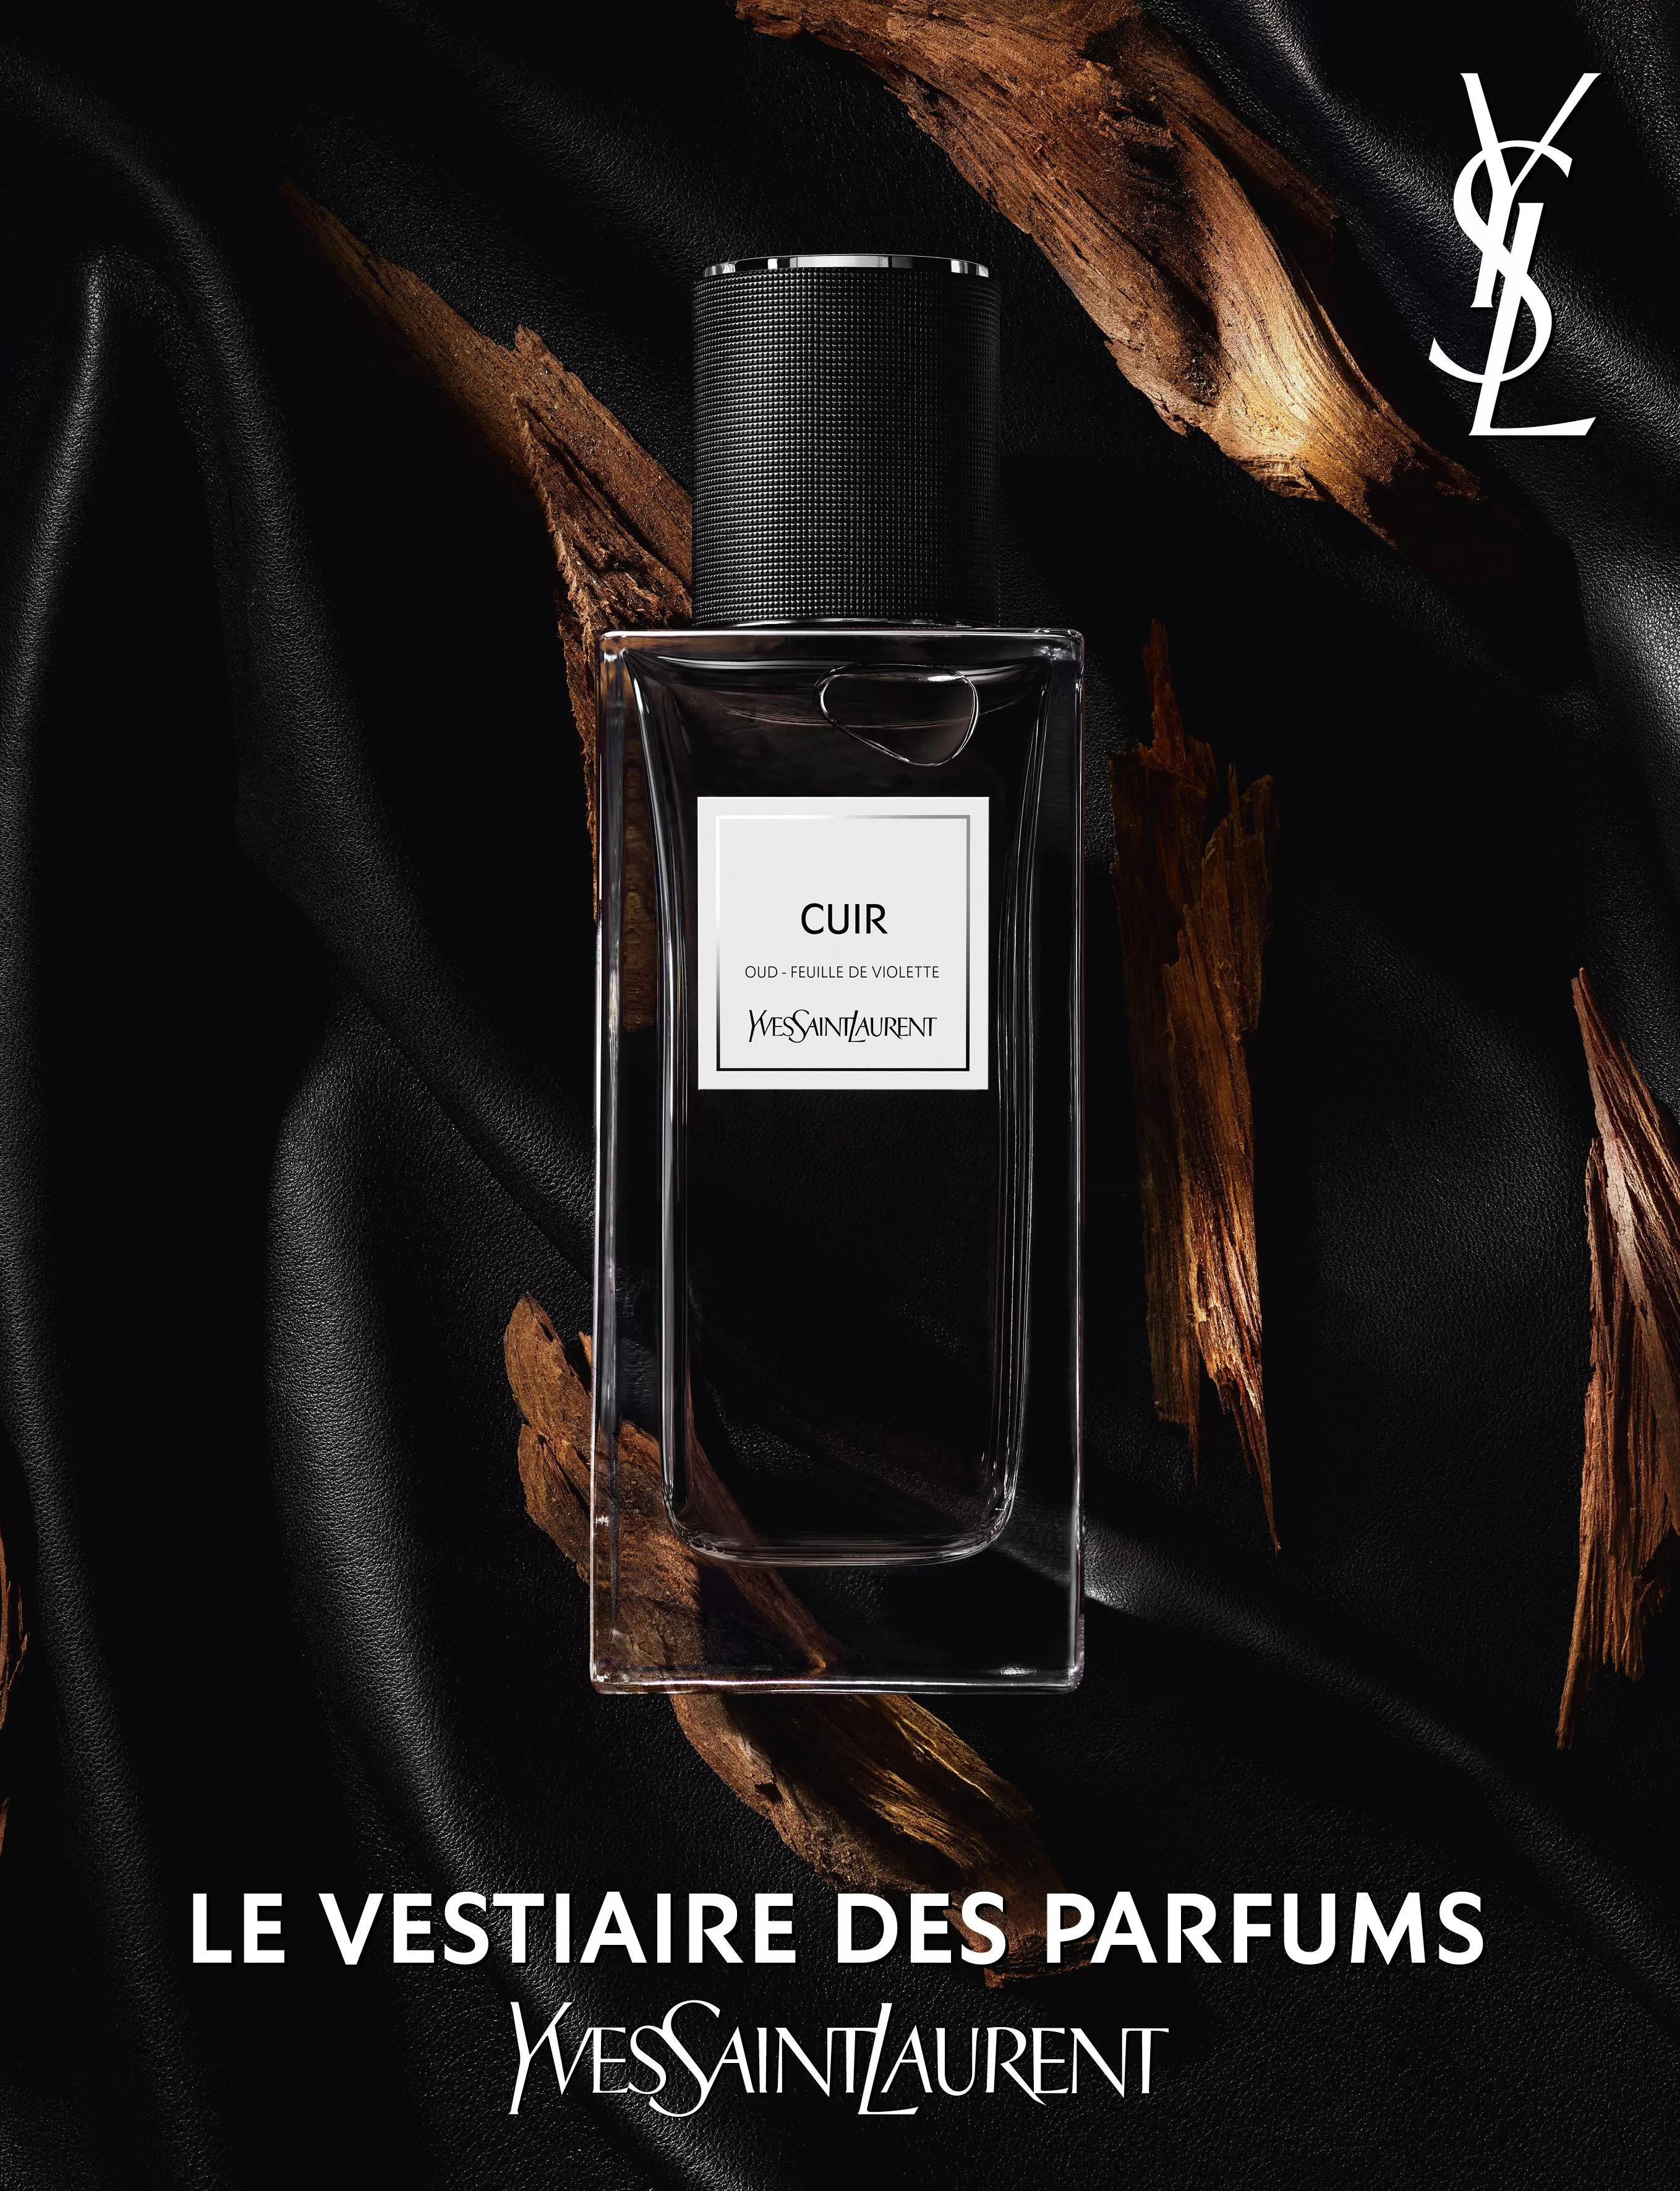 Yves Saint Laurent Beauty تطلق عطر Cuir الجديد